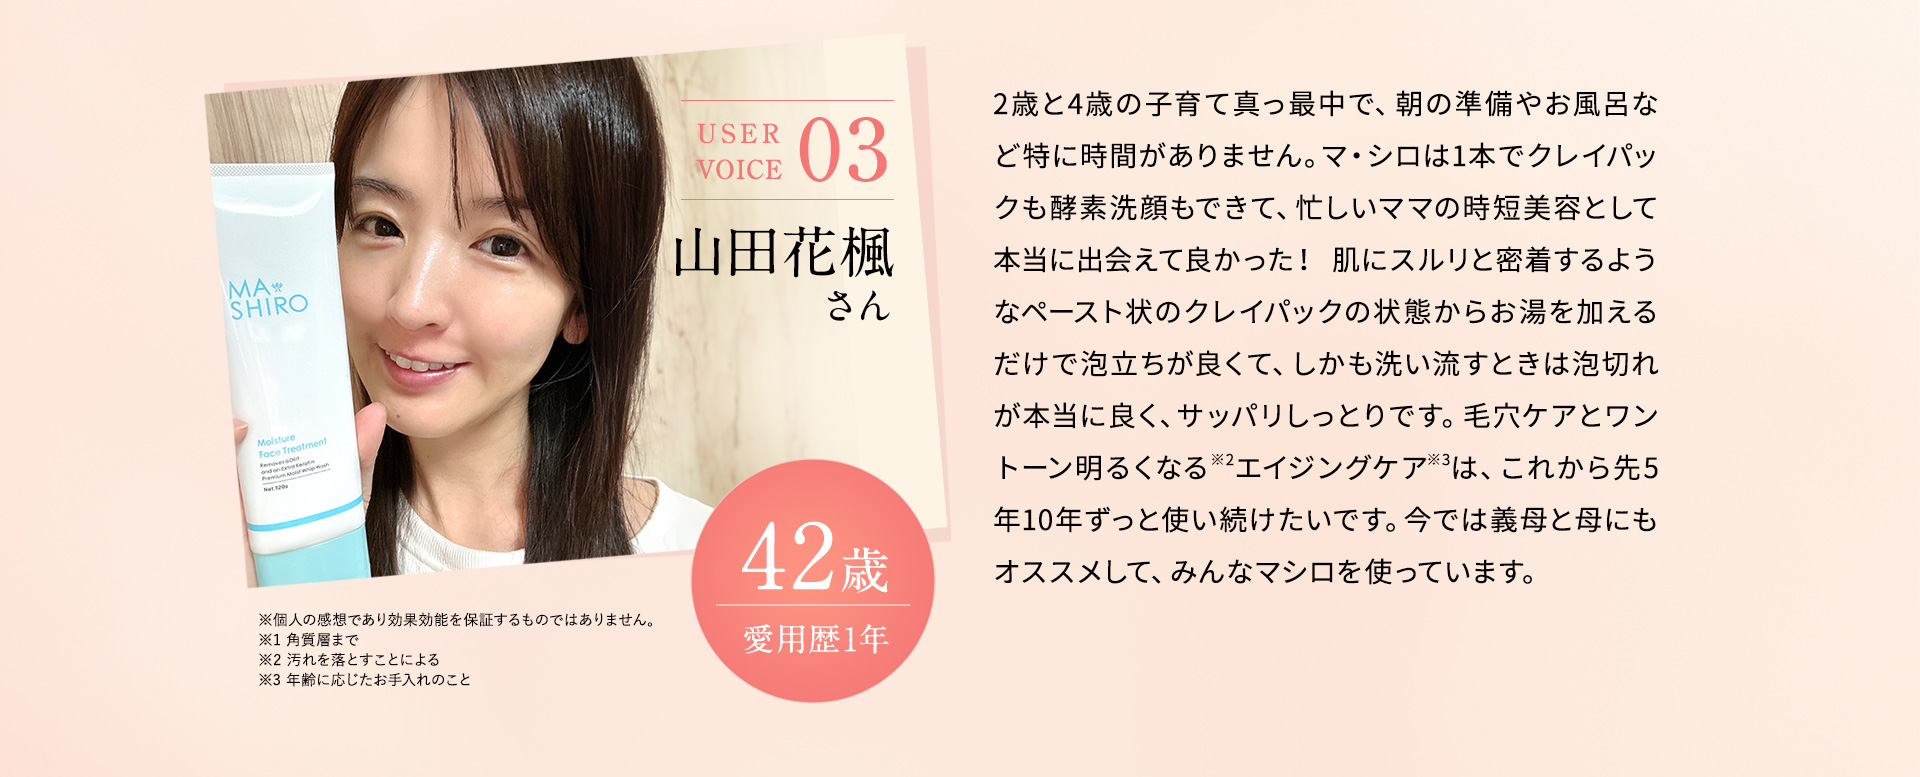 voice03:山田花楓さん42歳